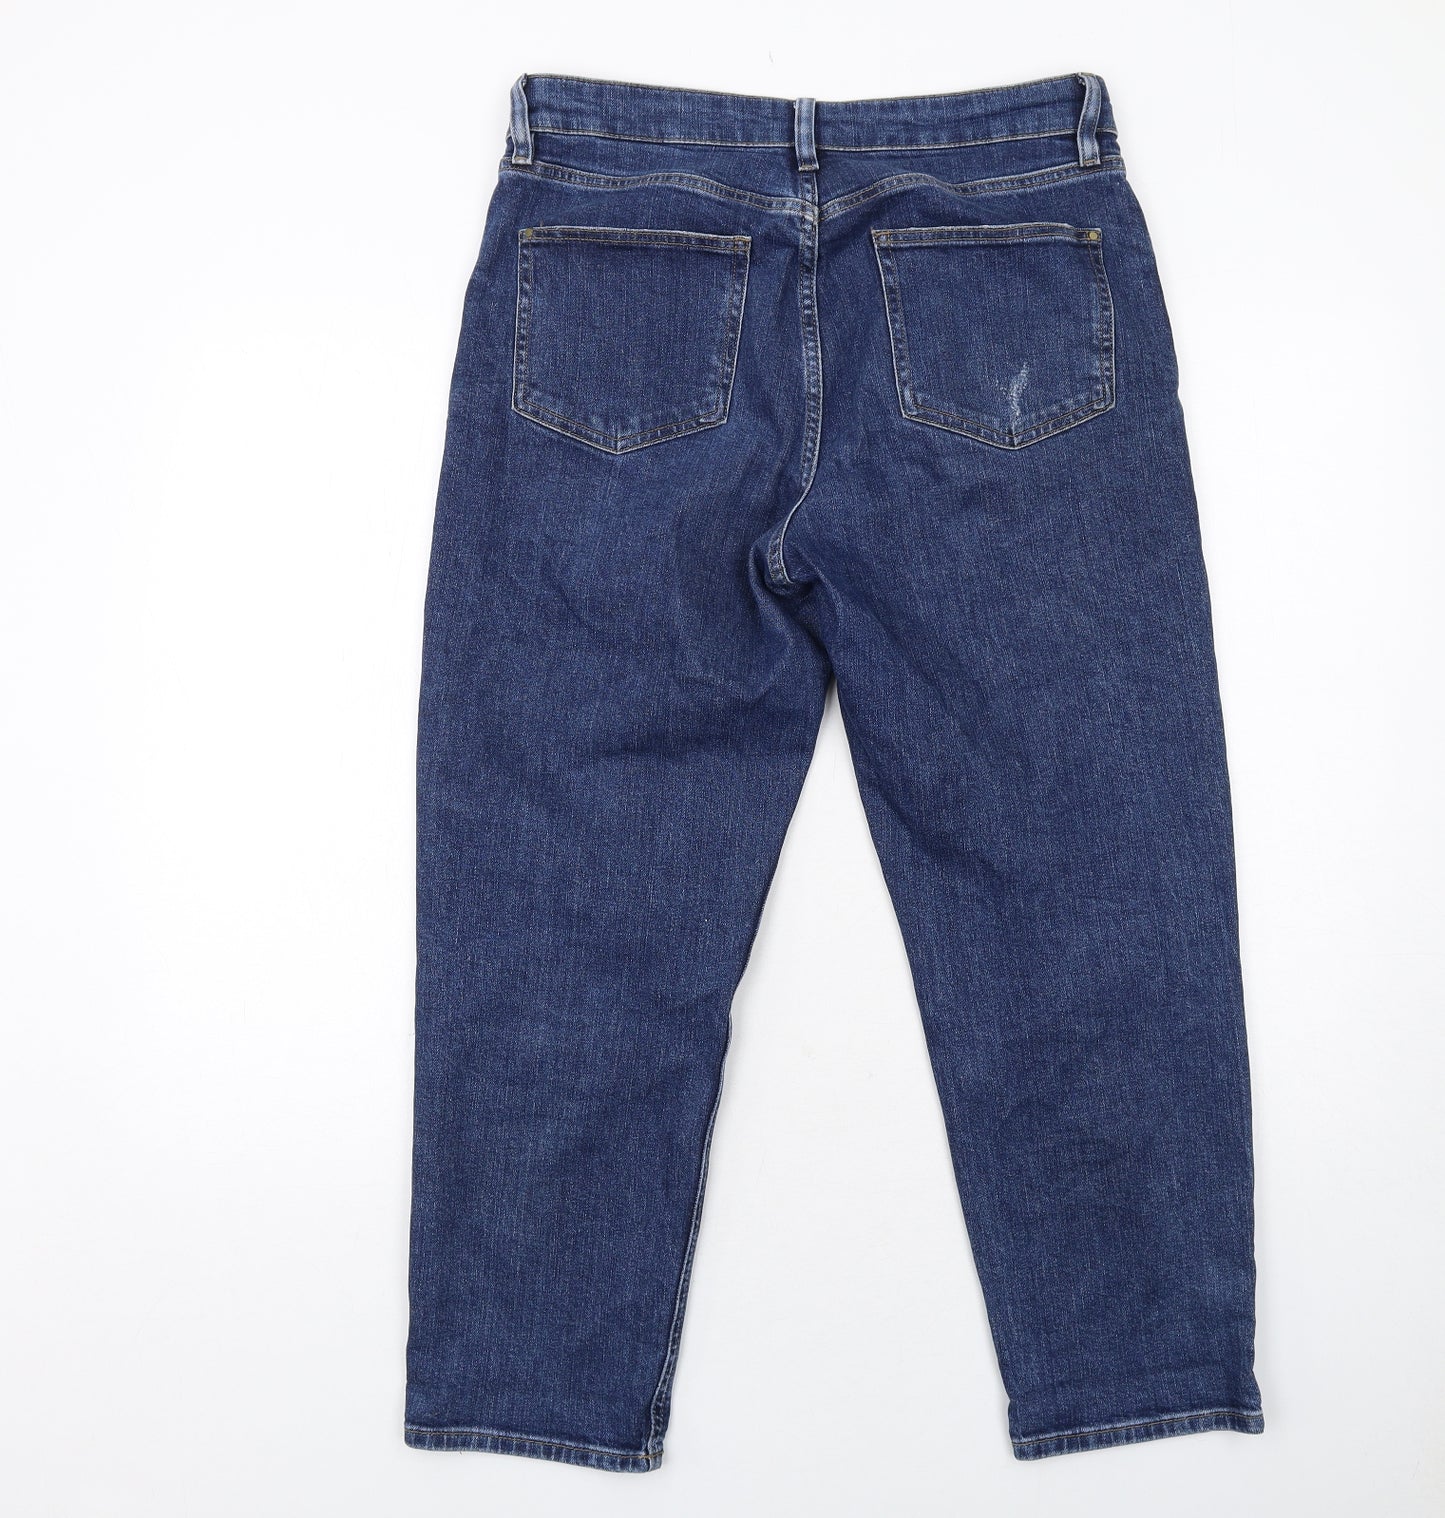 Marks and Spencer Womens Blue Cotton Boyfriend Jeans Size 12 Regular Zip